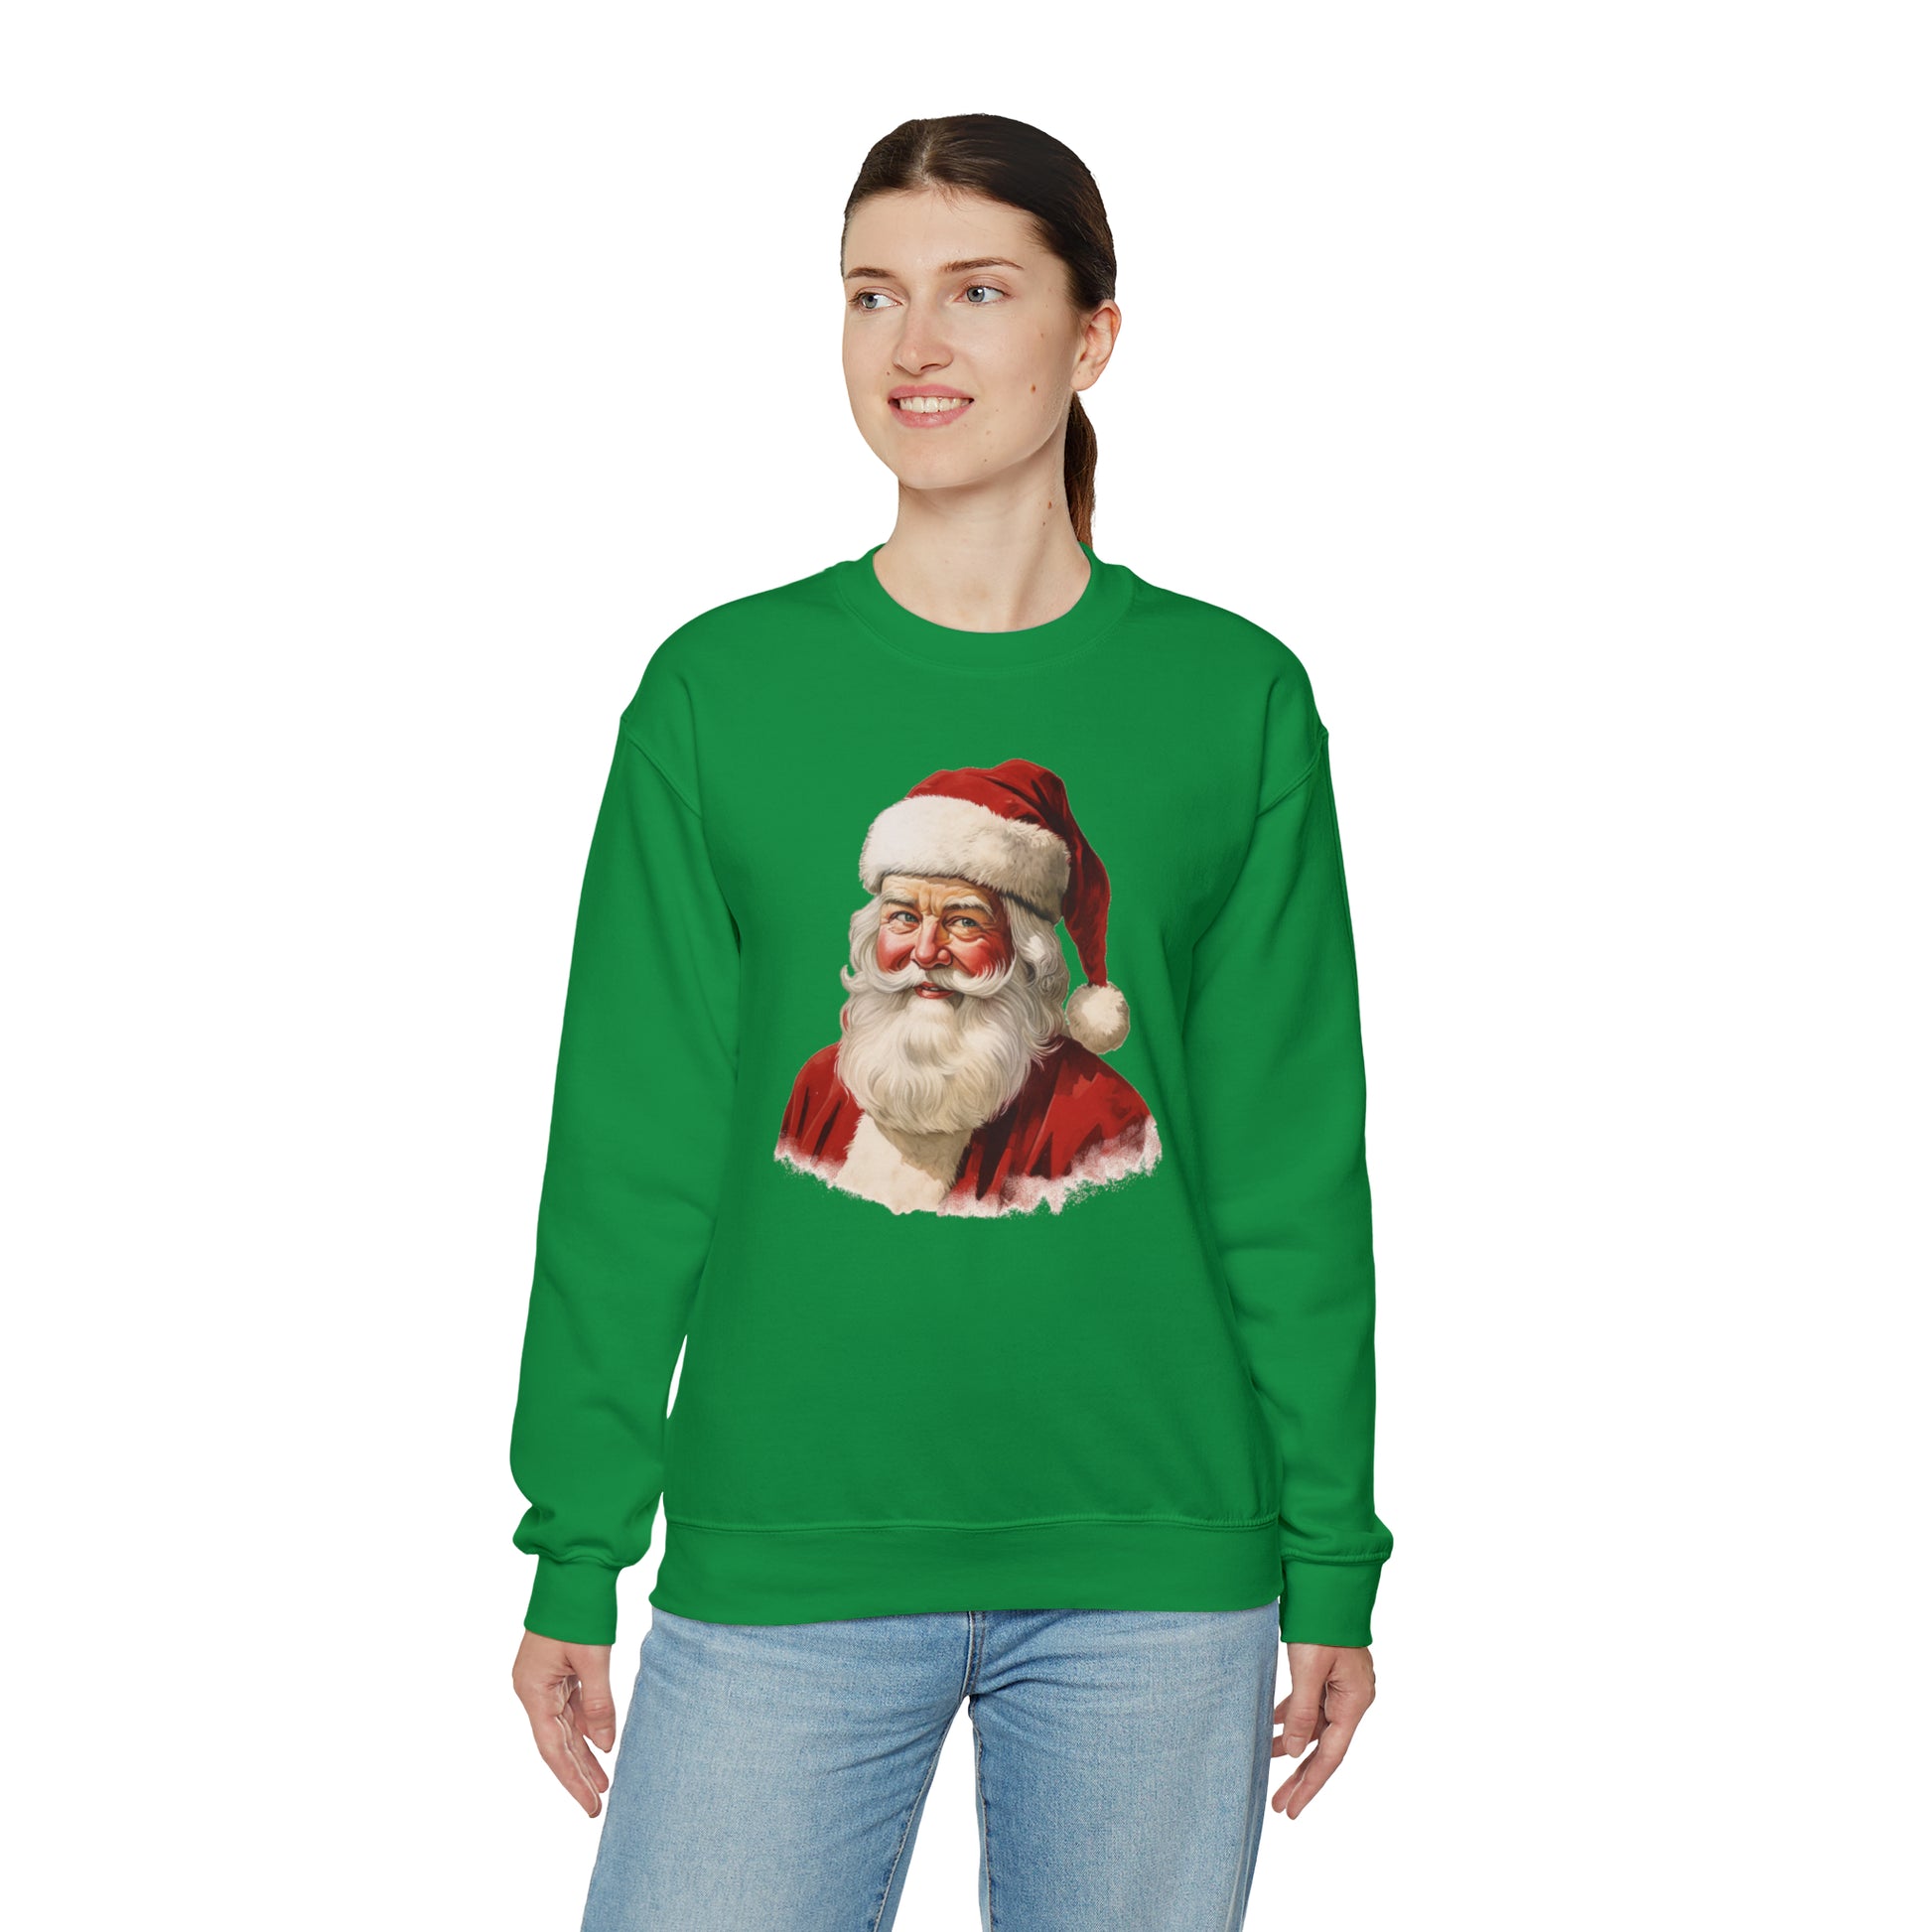 Vintage Santa Claus Sweatshirt, Retro Graphic Christmas Xmas Crewneck Fleece Cotton Sweater Jumper Pullover Men Women Aesthetic Top Starcove Fashion